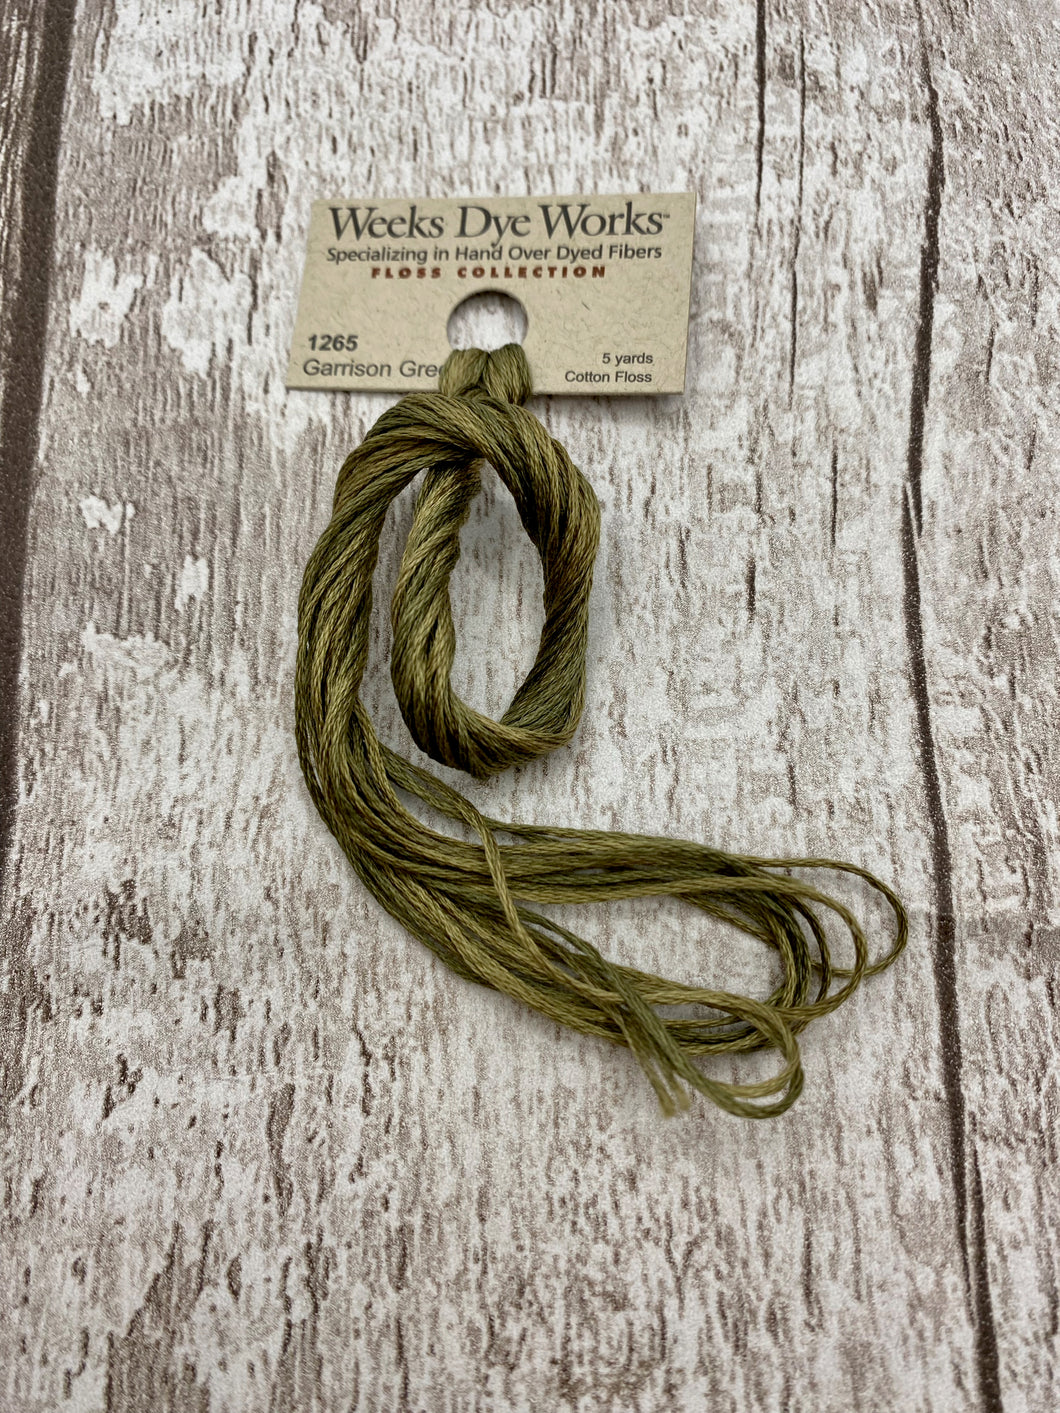 Garrison Green (#1264) Weeks Dye Works, 6-strand cotton floss